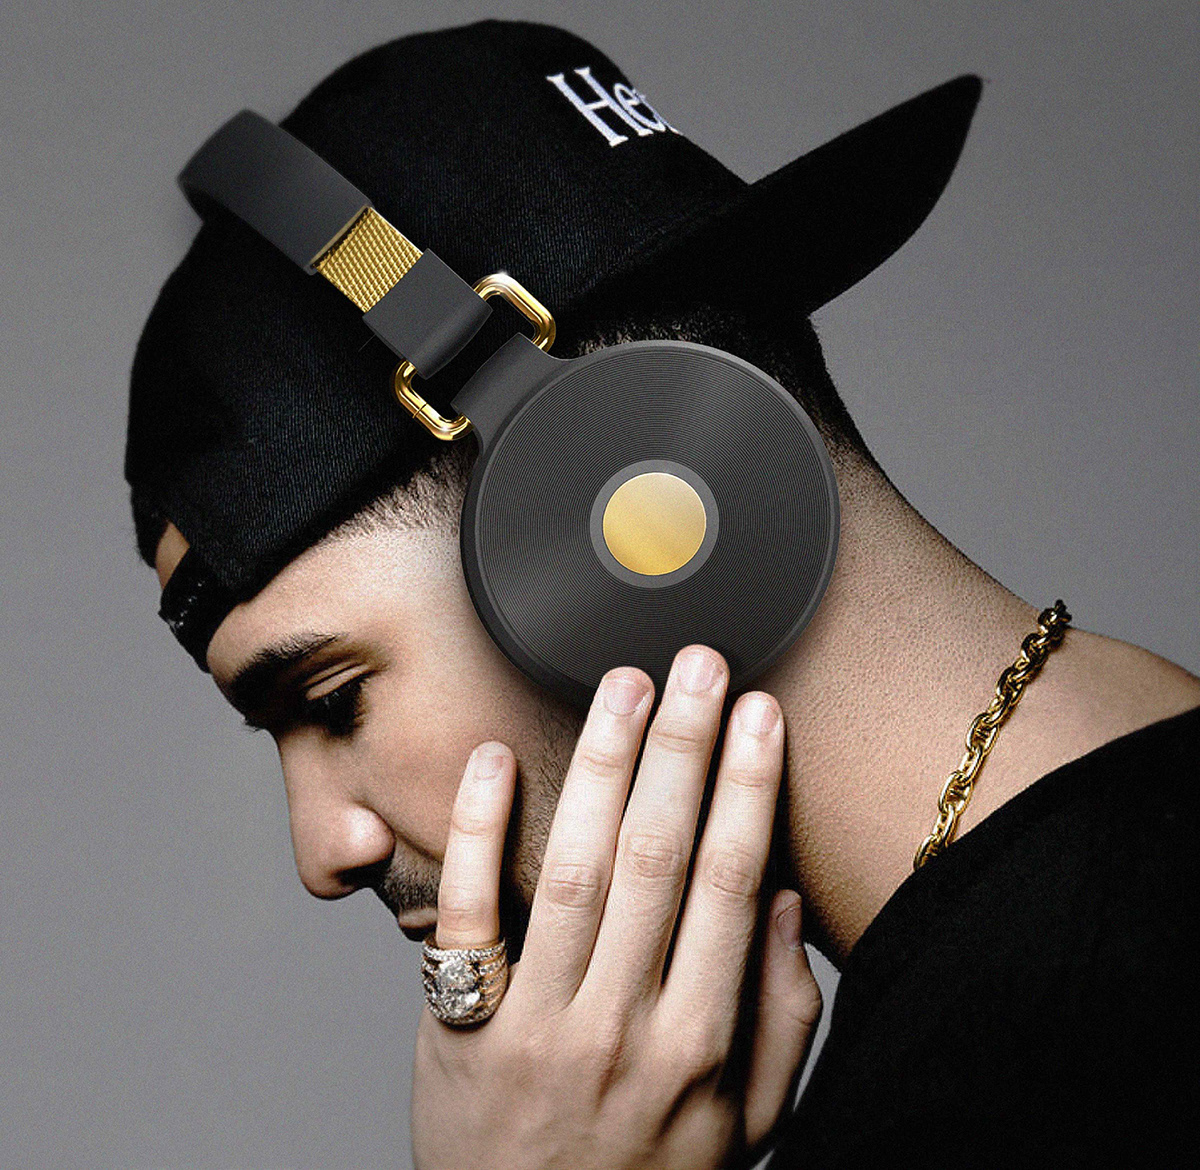 design productdesign industrialdesign headphones ux hiphop rapper headphone gold adobeawards